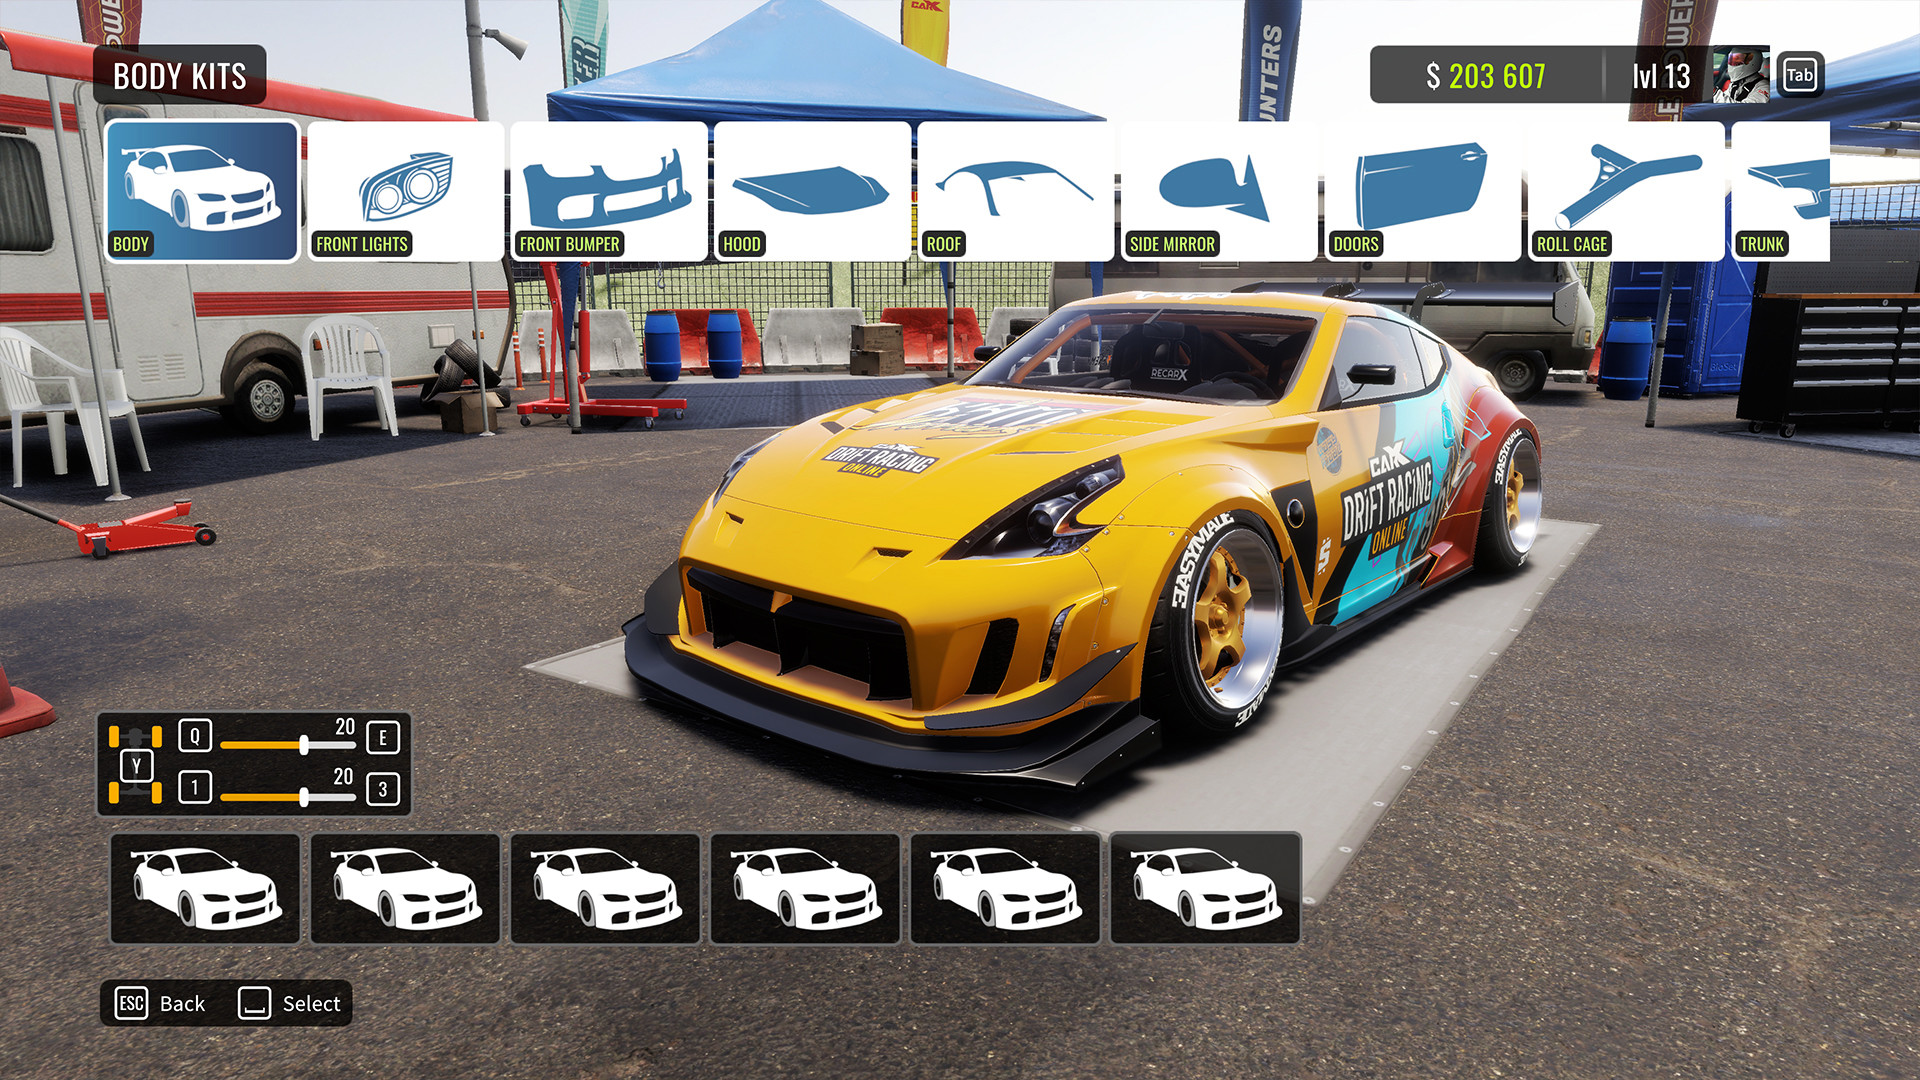 CarX Drift Racing Online - Download